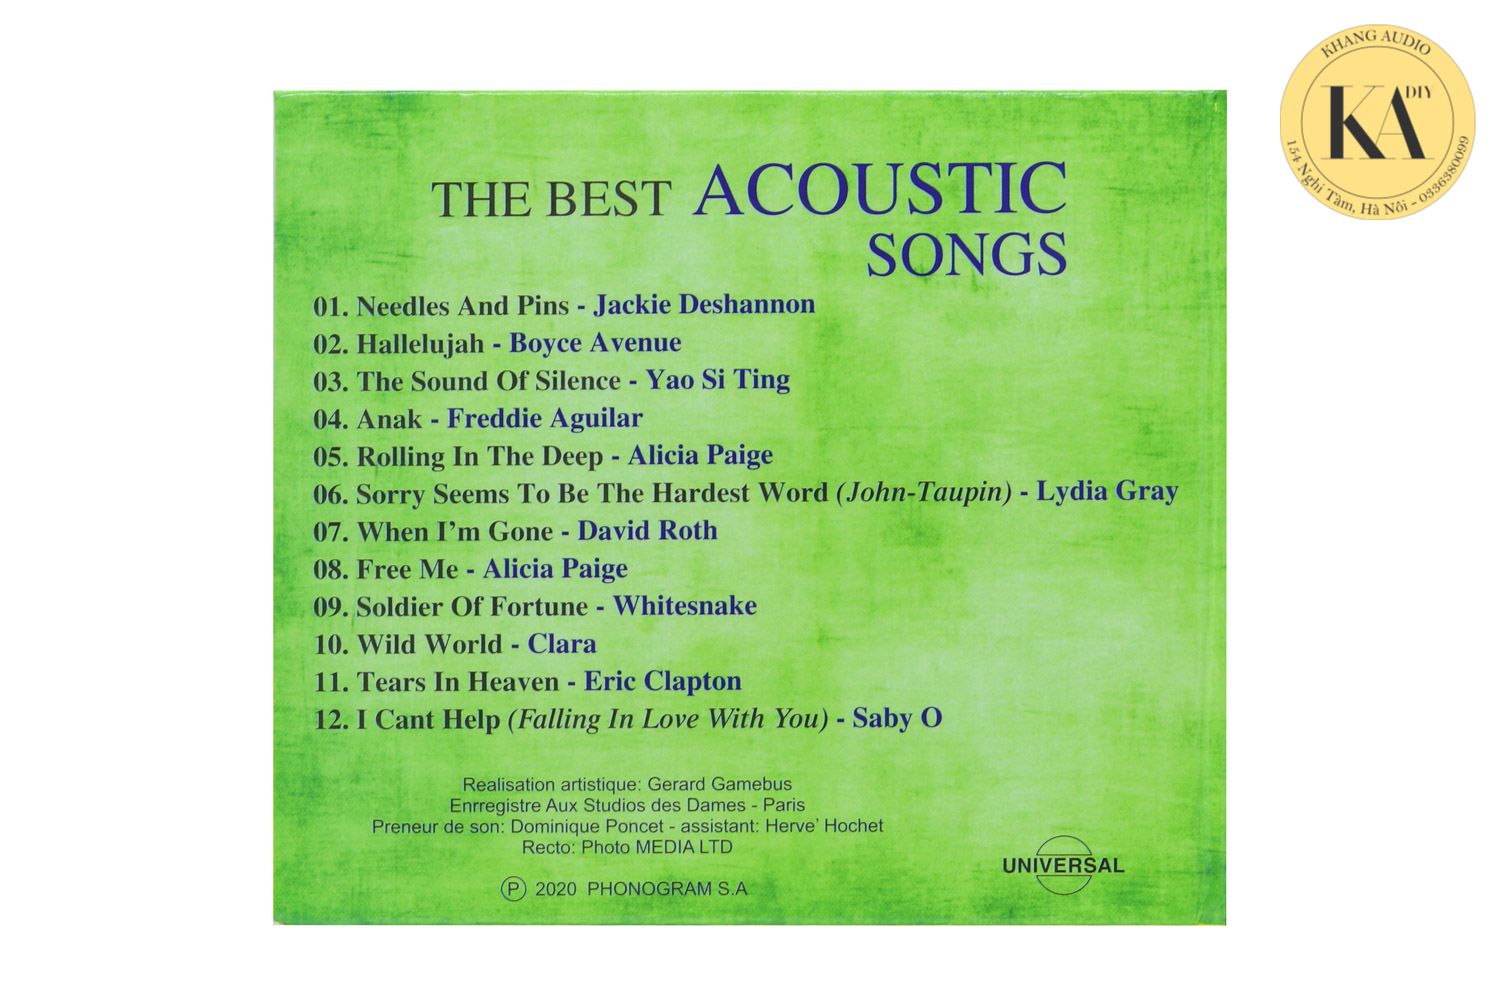 Master Acoustic Vol.2